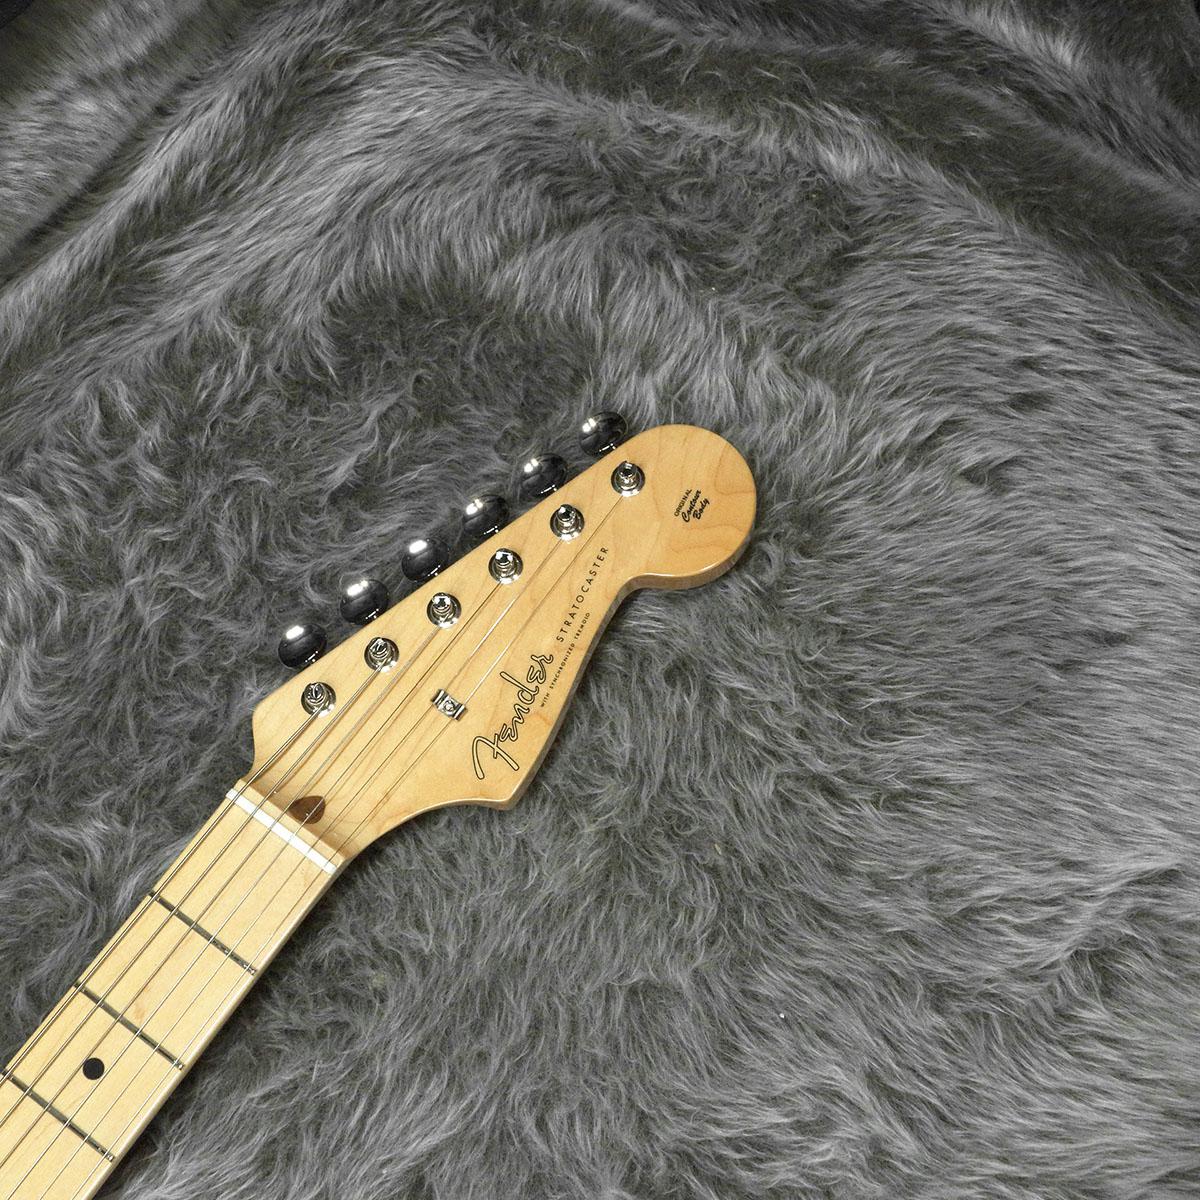 Made in Japan Traditional 50s Stratocaster MN 2-Color Sunburst【セール開催中!!】